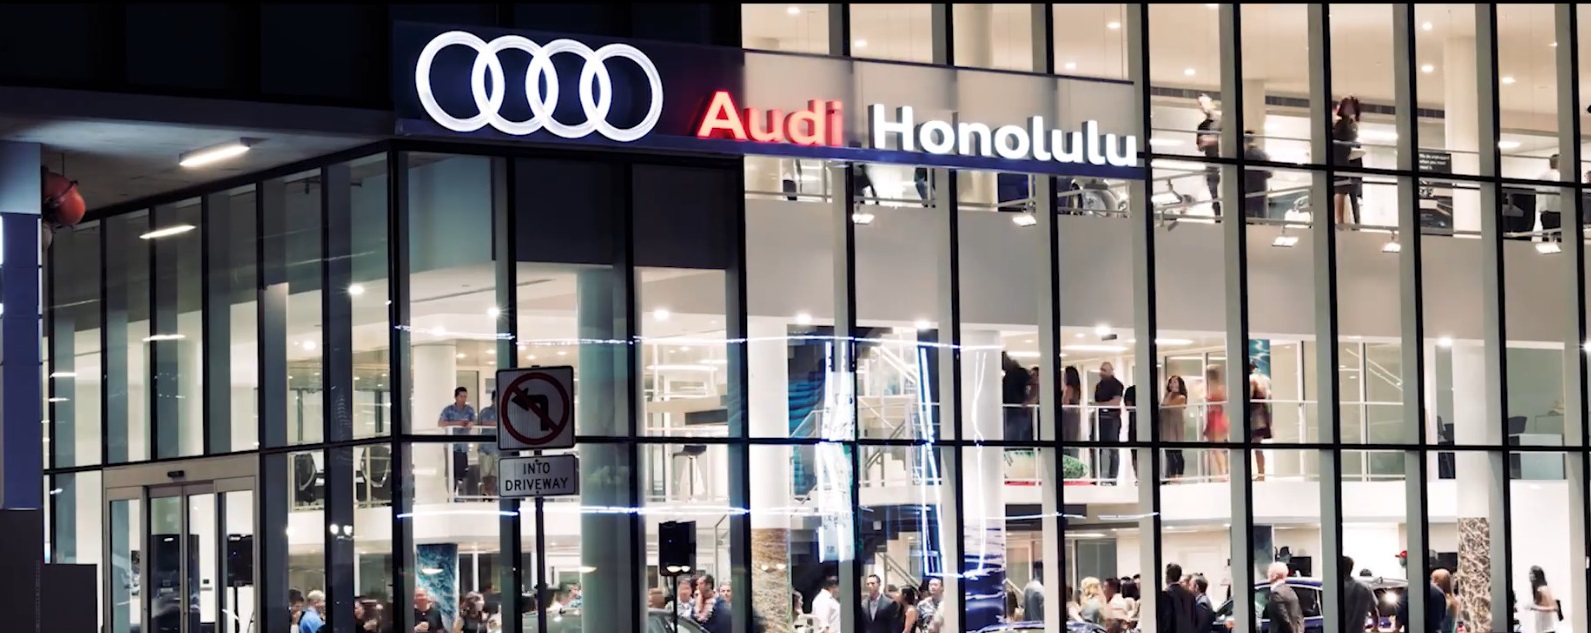 Audi Honolulu